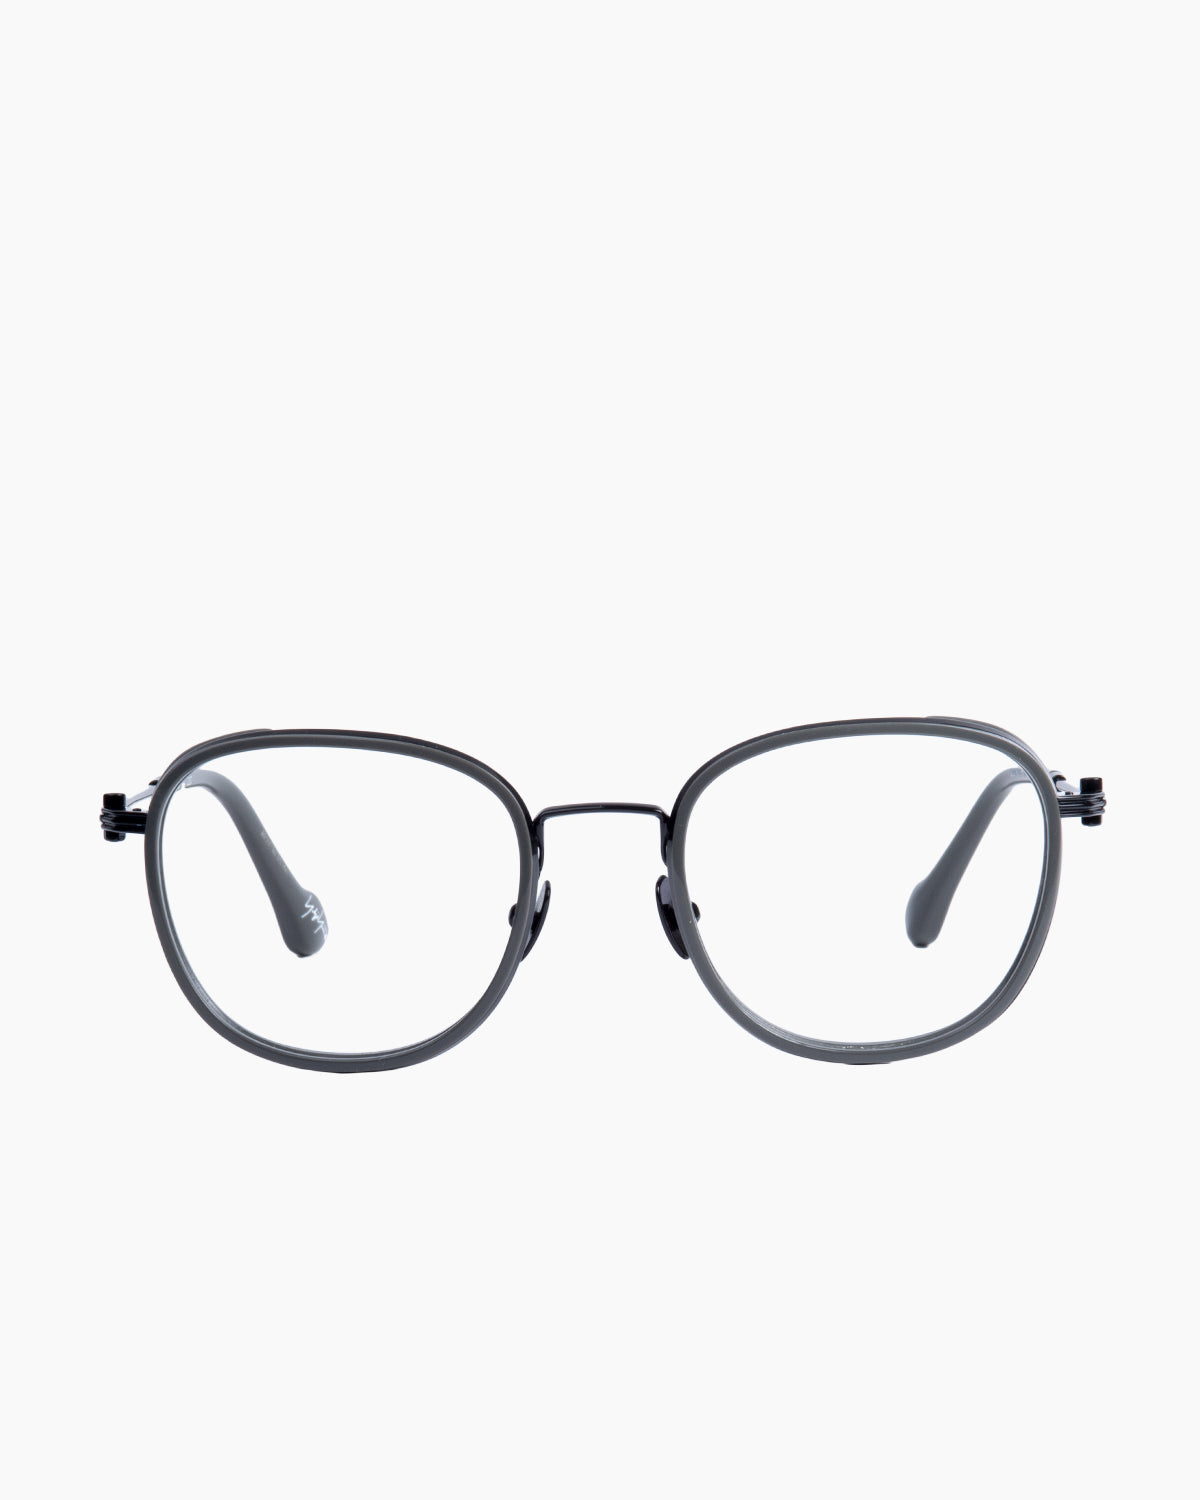 Yohji Yamamoto - Look005 - 002 | Bar à lunettes:  Marie-Sophie Dion